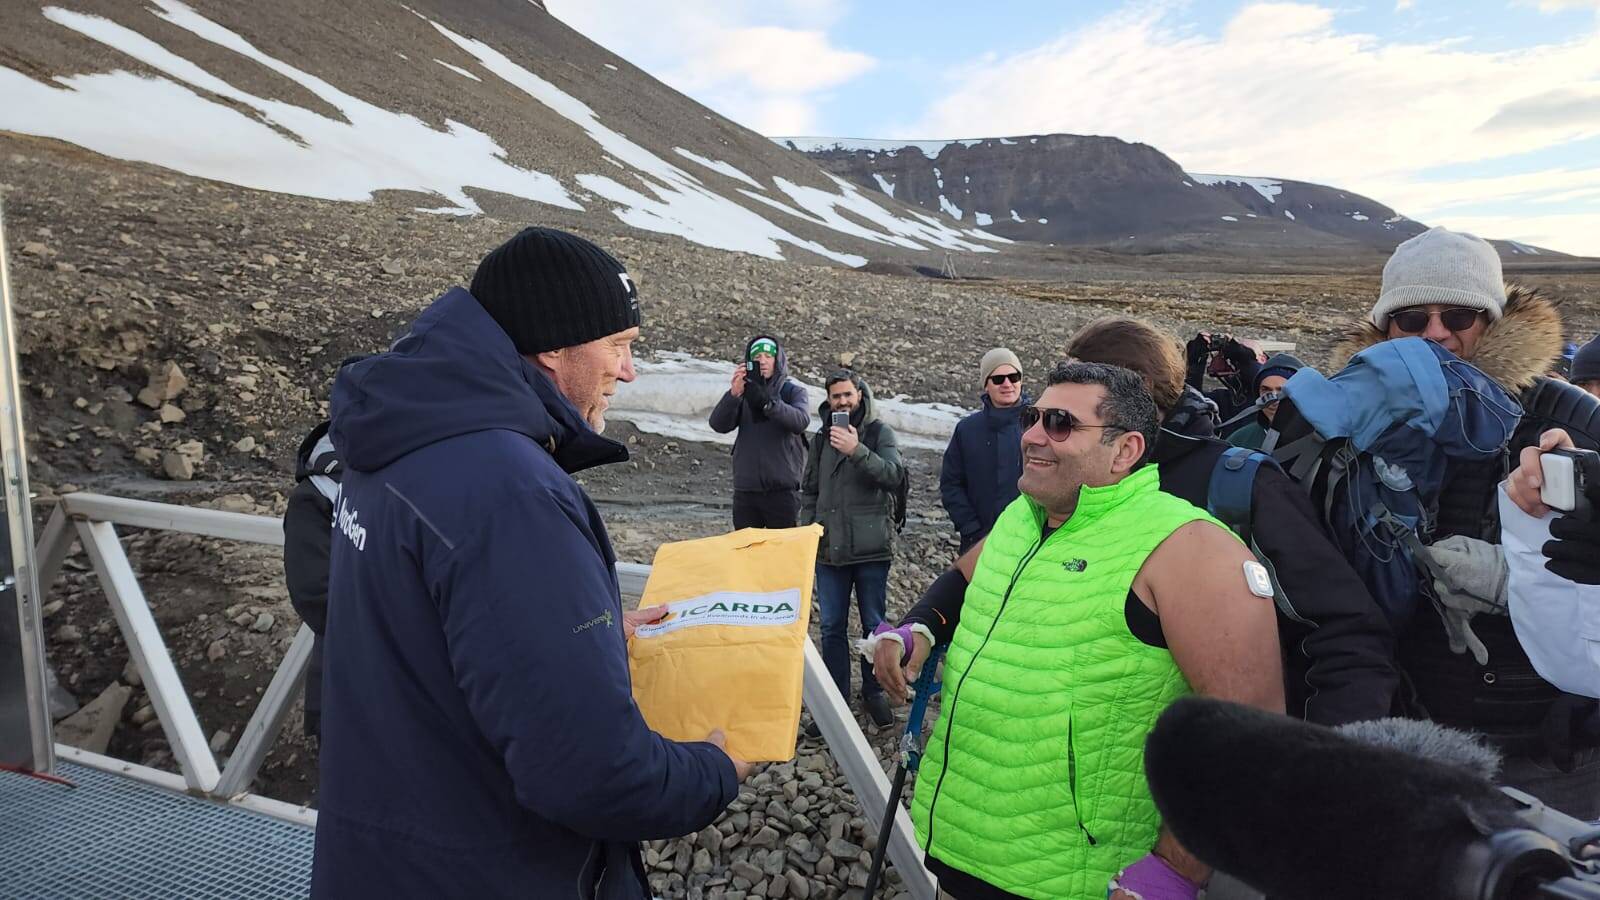 Michael Haddad delivering ICARDA seeds to Dr. Asmund Asdal at the Svalbard Global Seed Vault after completing his walk.